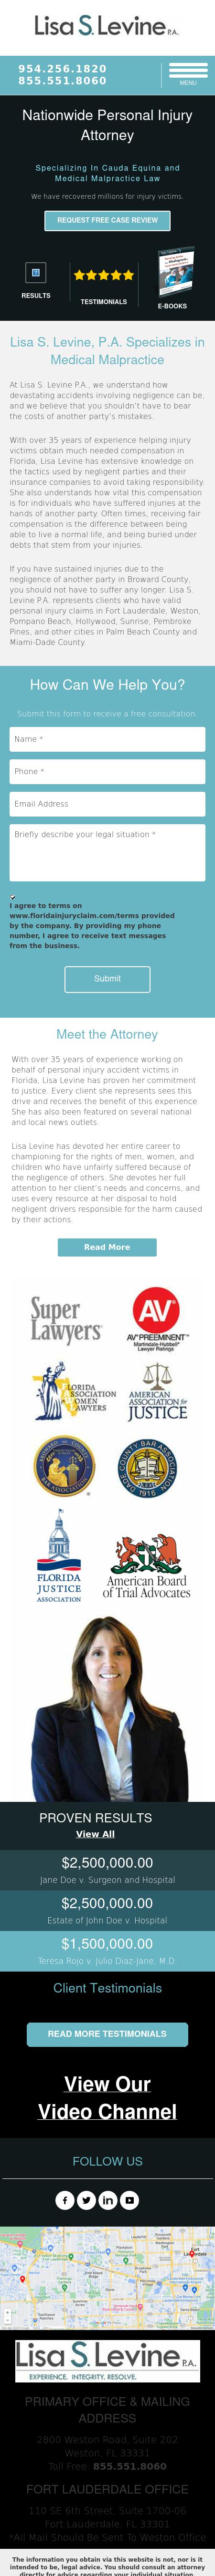 Lisa S. Levine P.A. - Fort Lauderdale FL Lawyers